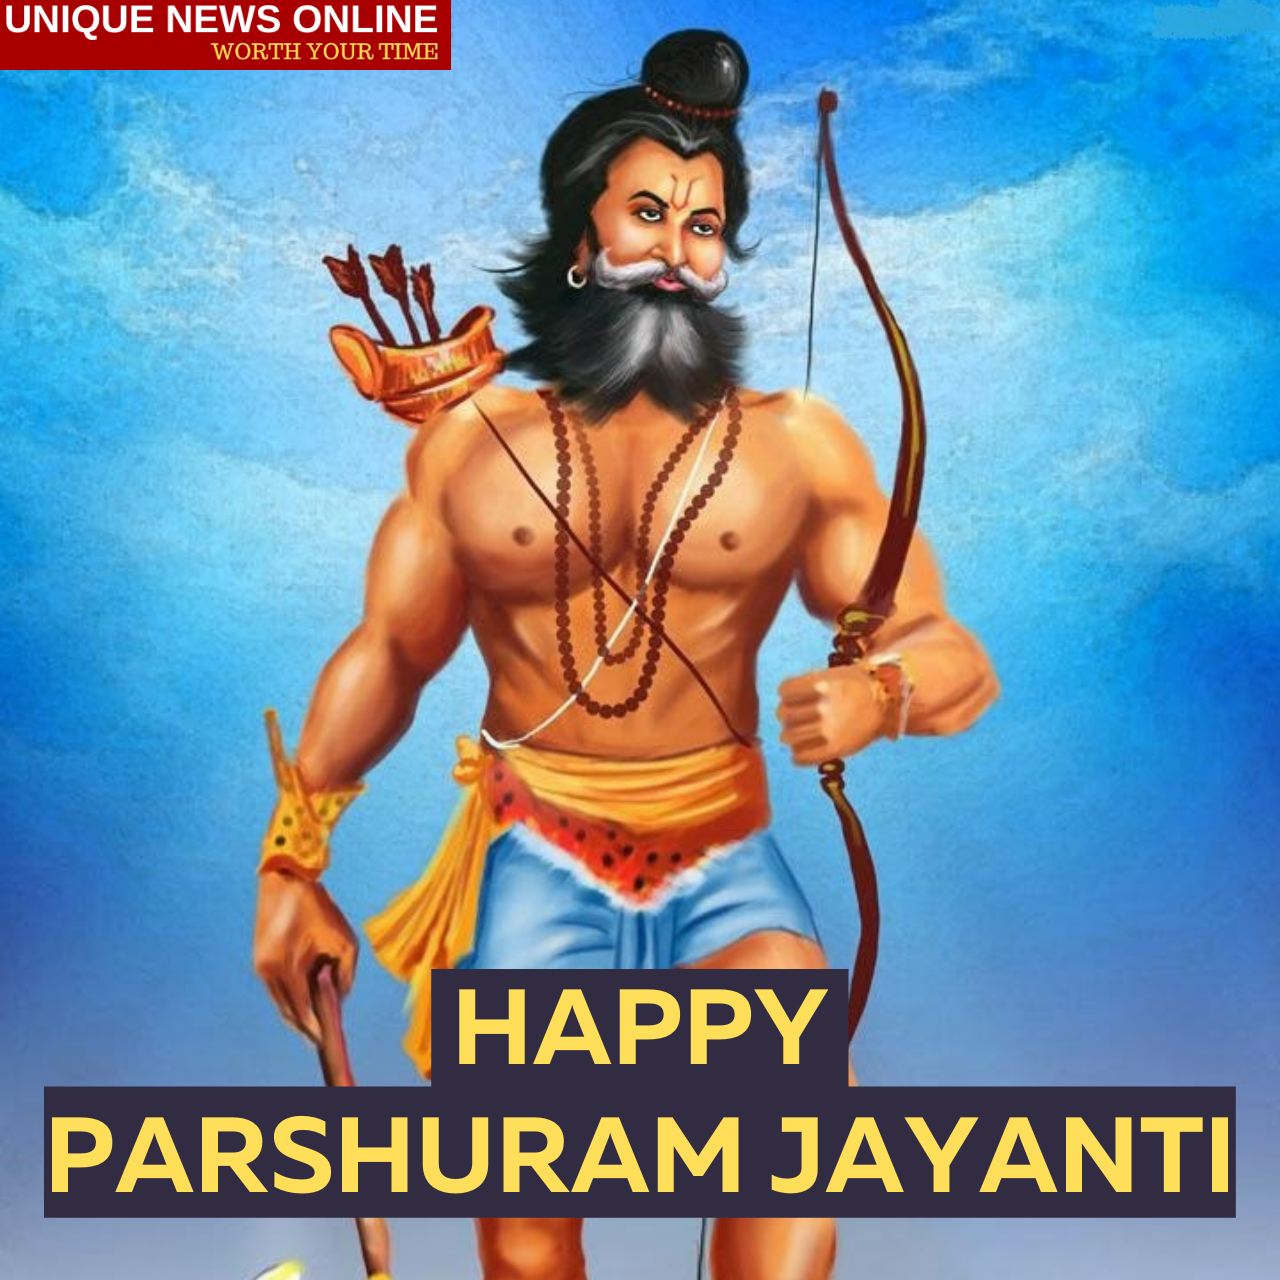 Parshuram Jayanti Greetings